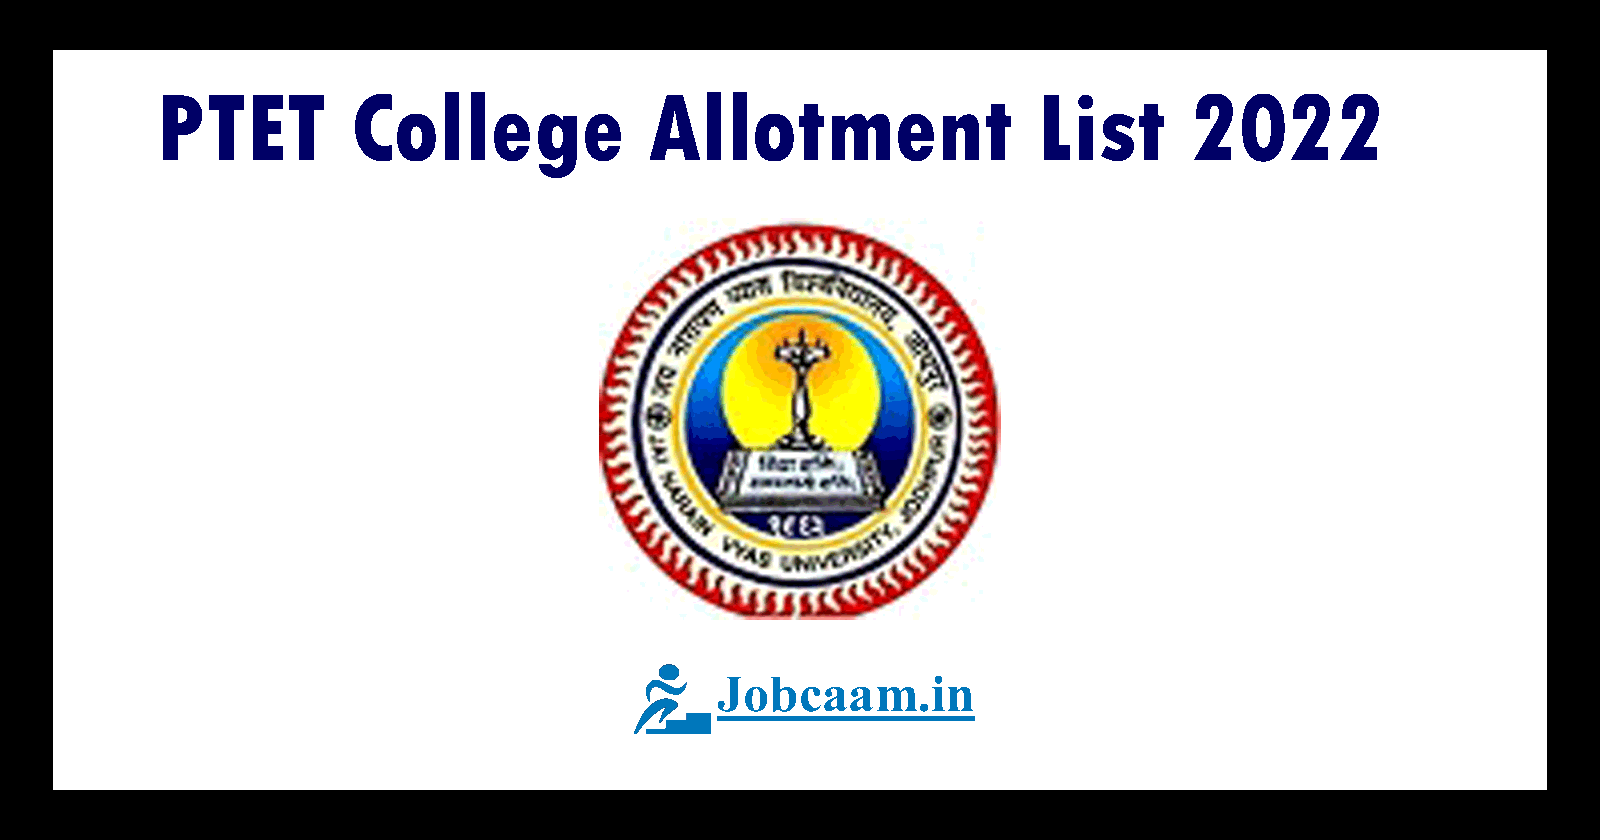 PTET College Allotment List 2022